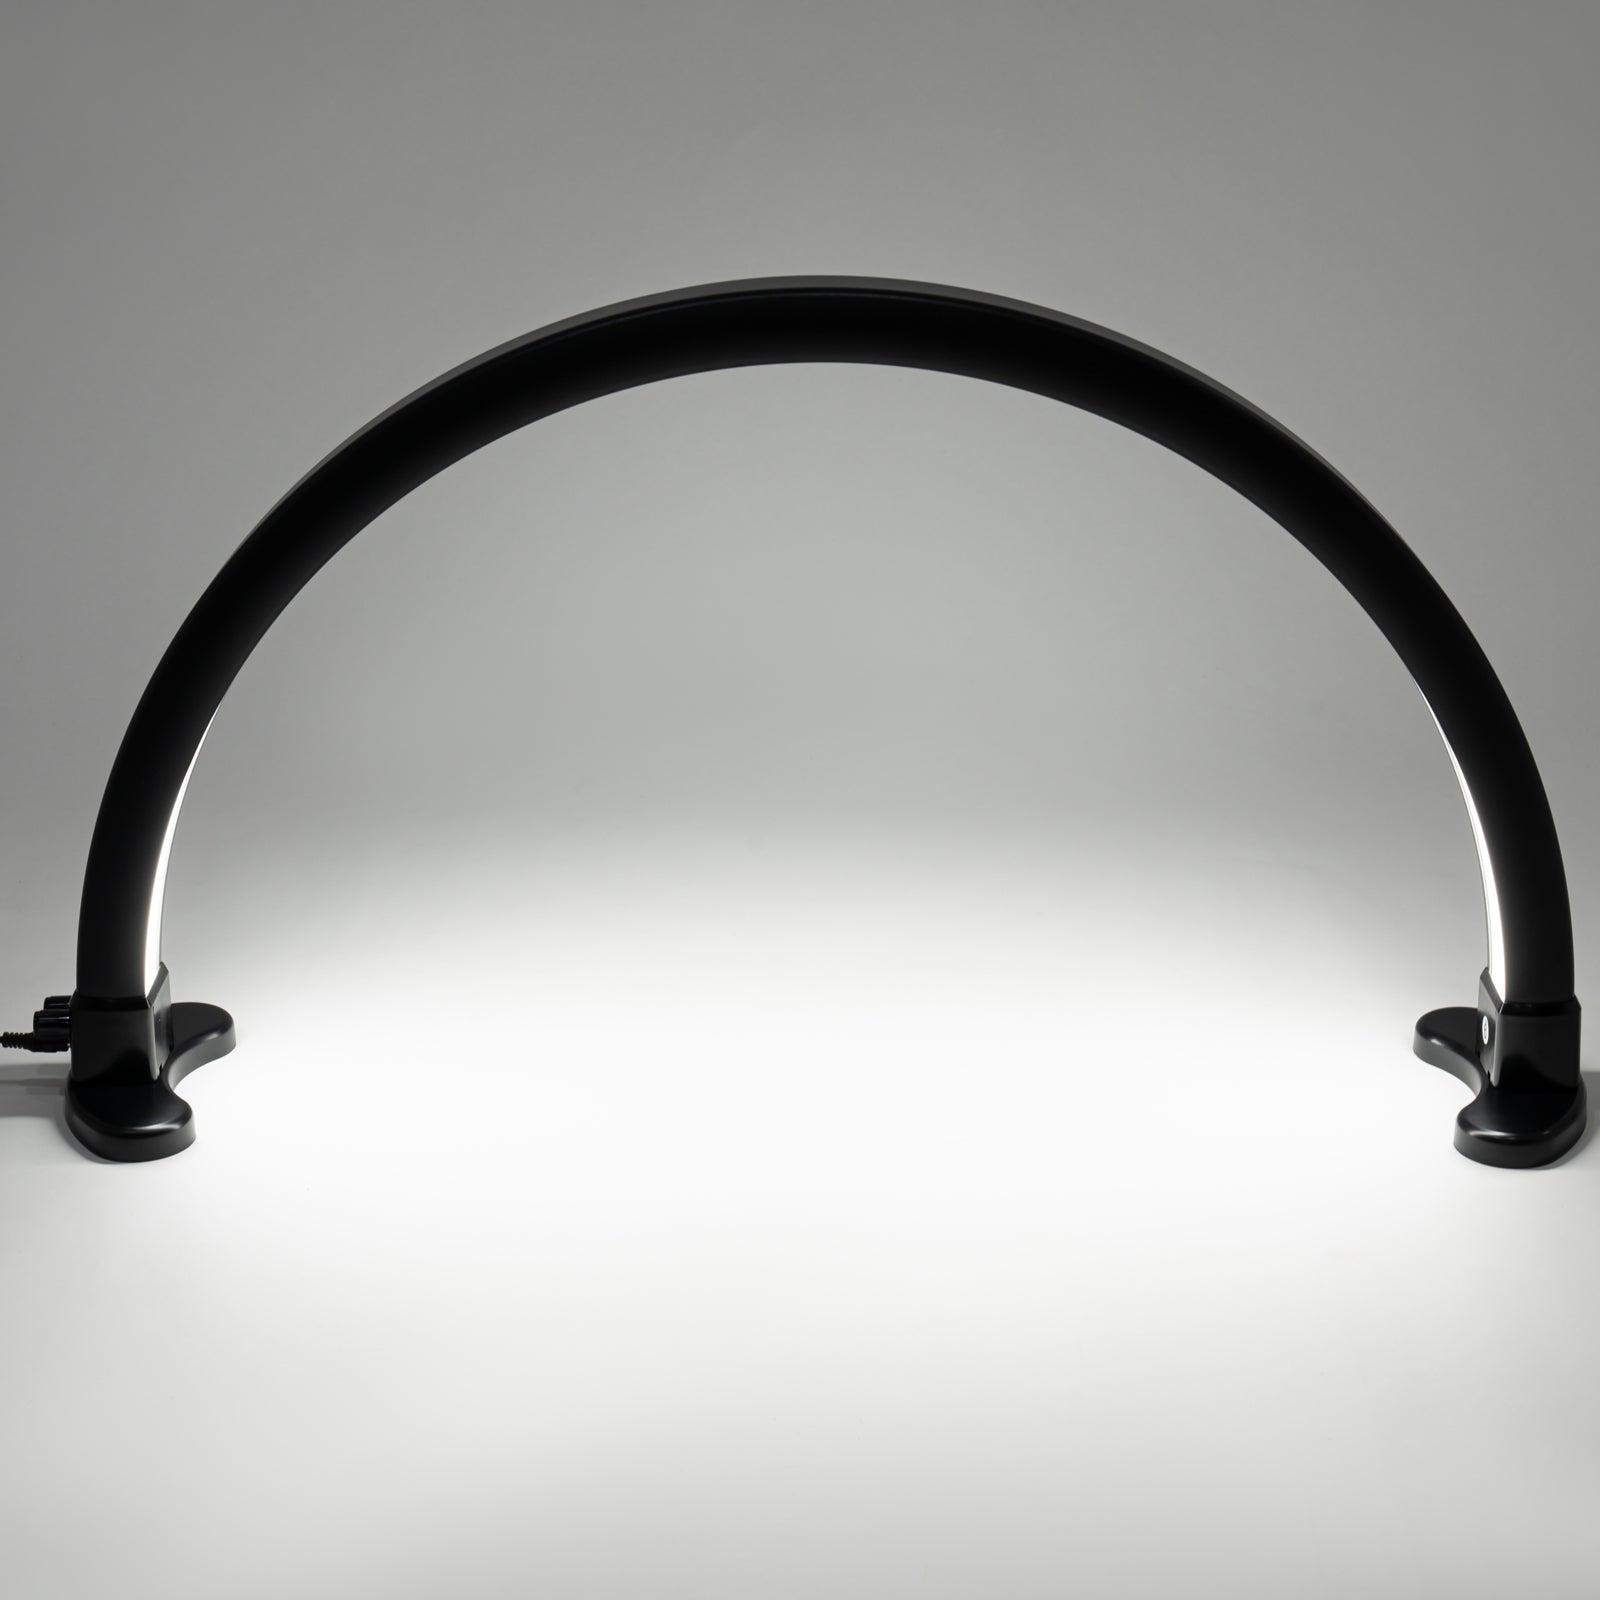 Lampada da scrivania a mezzaluna, 45 W, , luce LED per ciglia, lampada cosmetica a mezzaluna (nero)